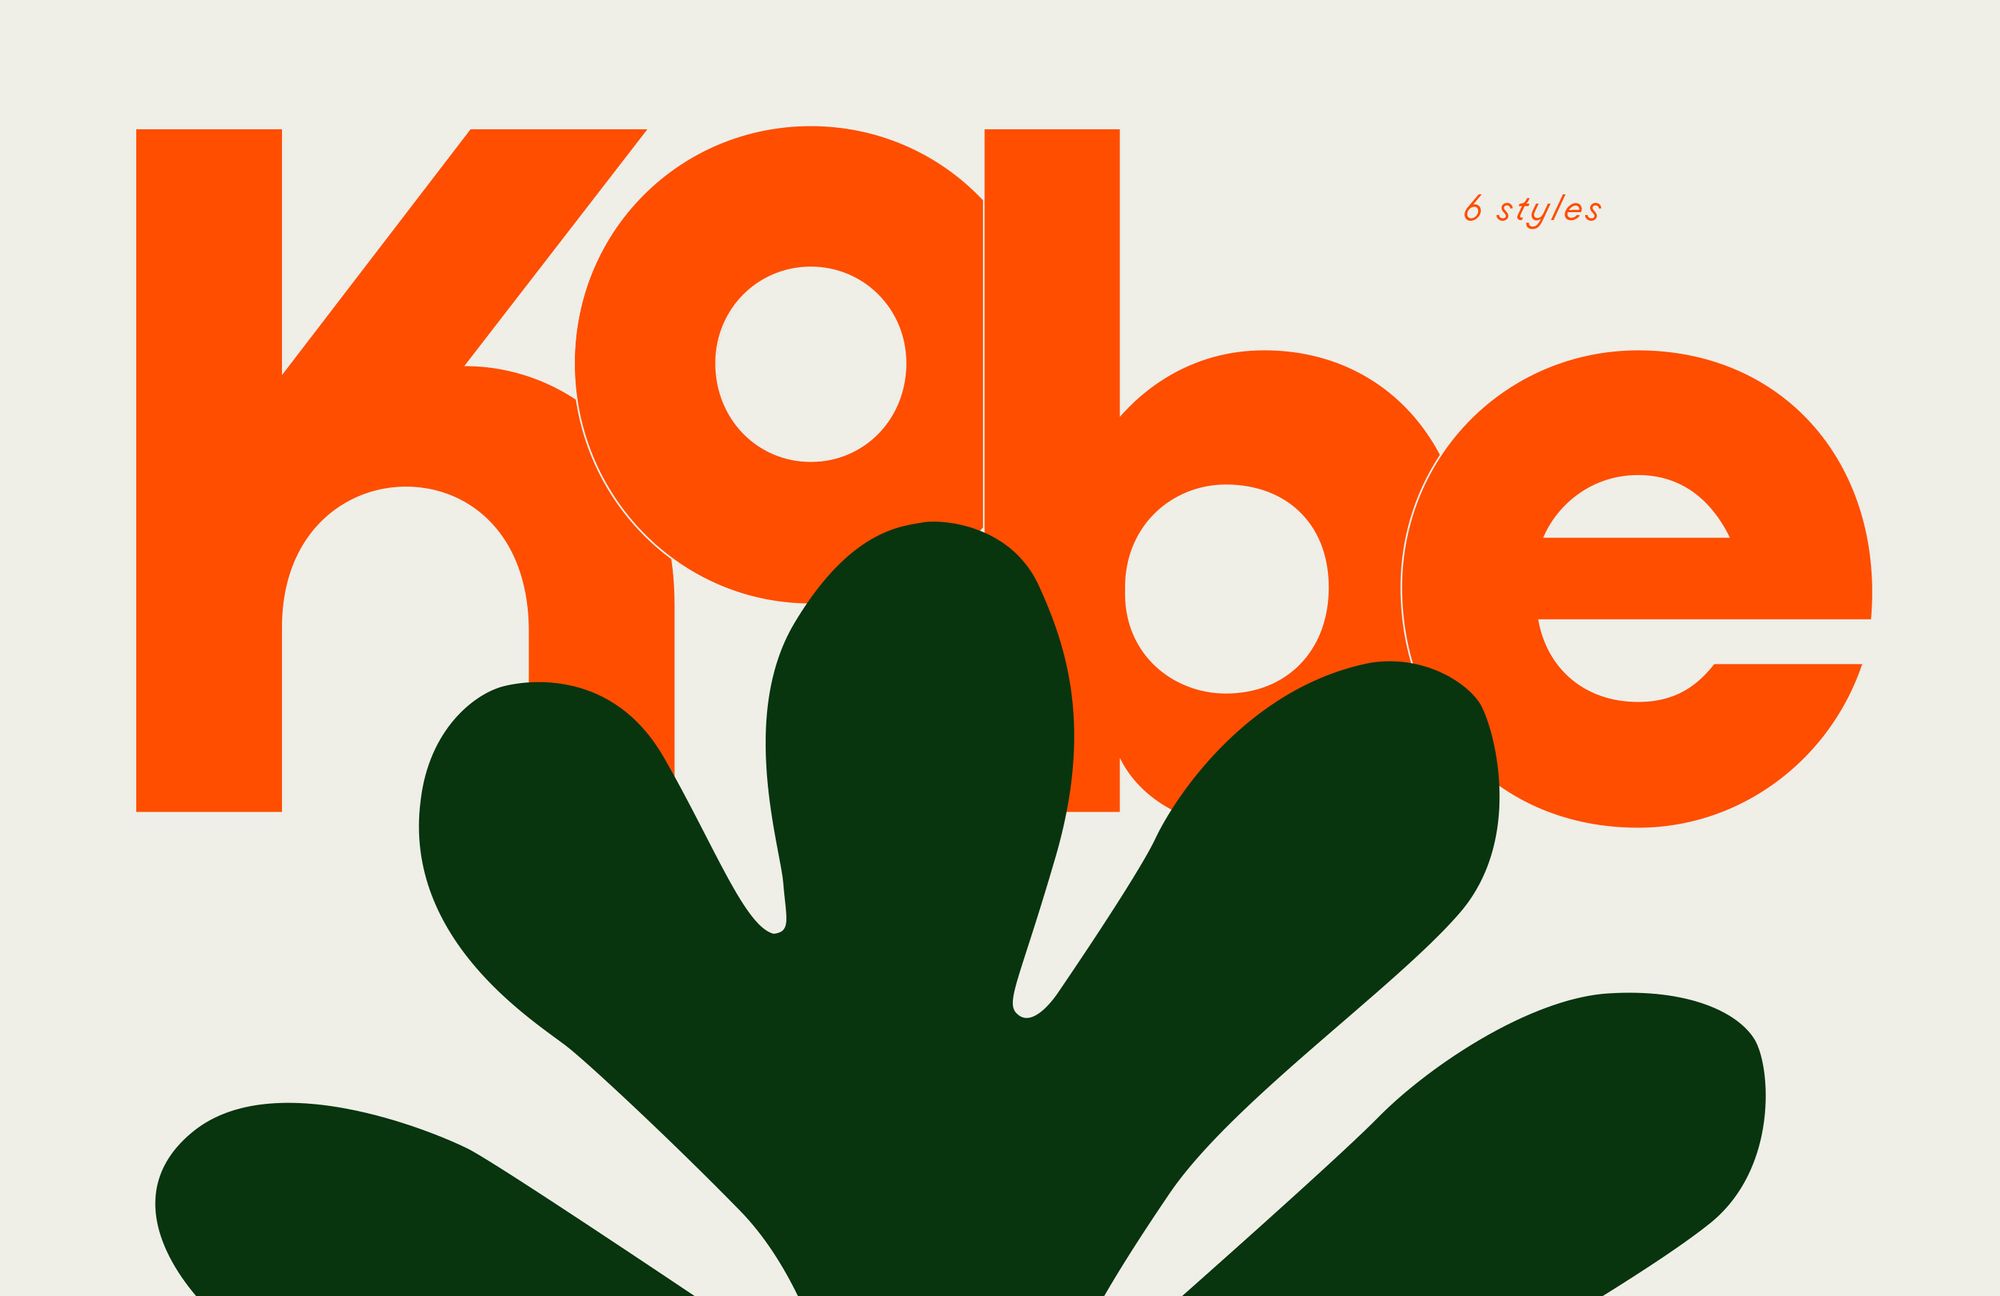 Kobe Typeface